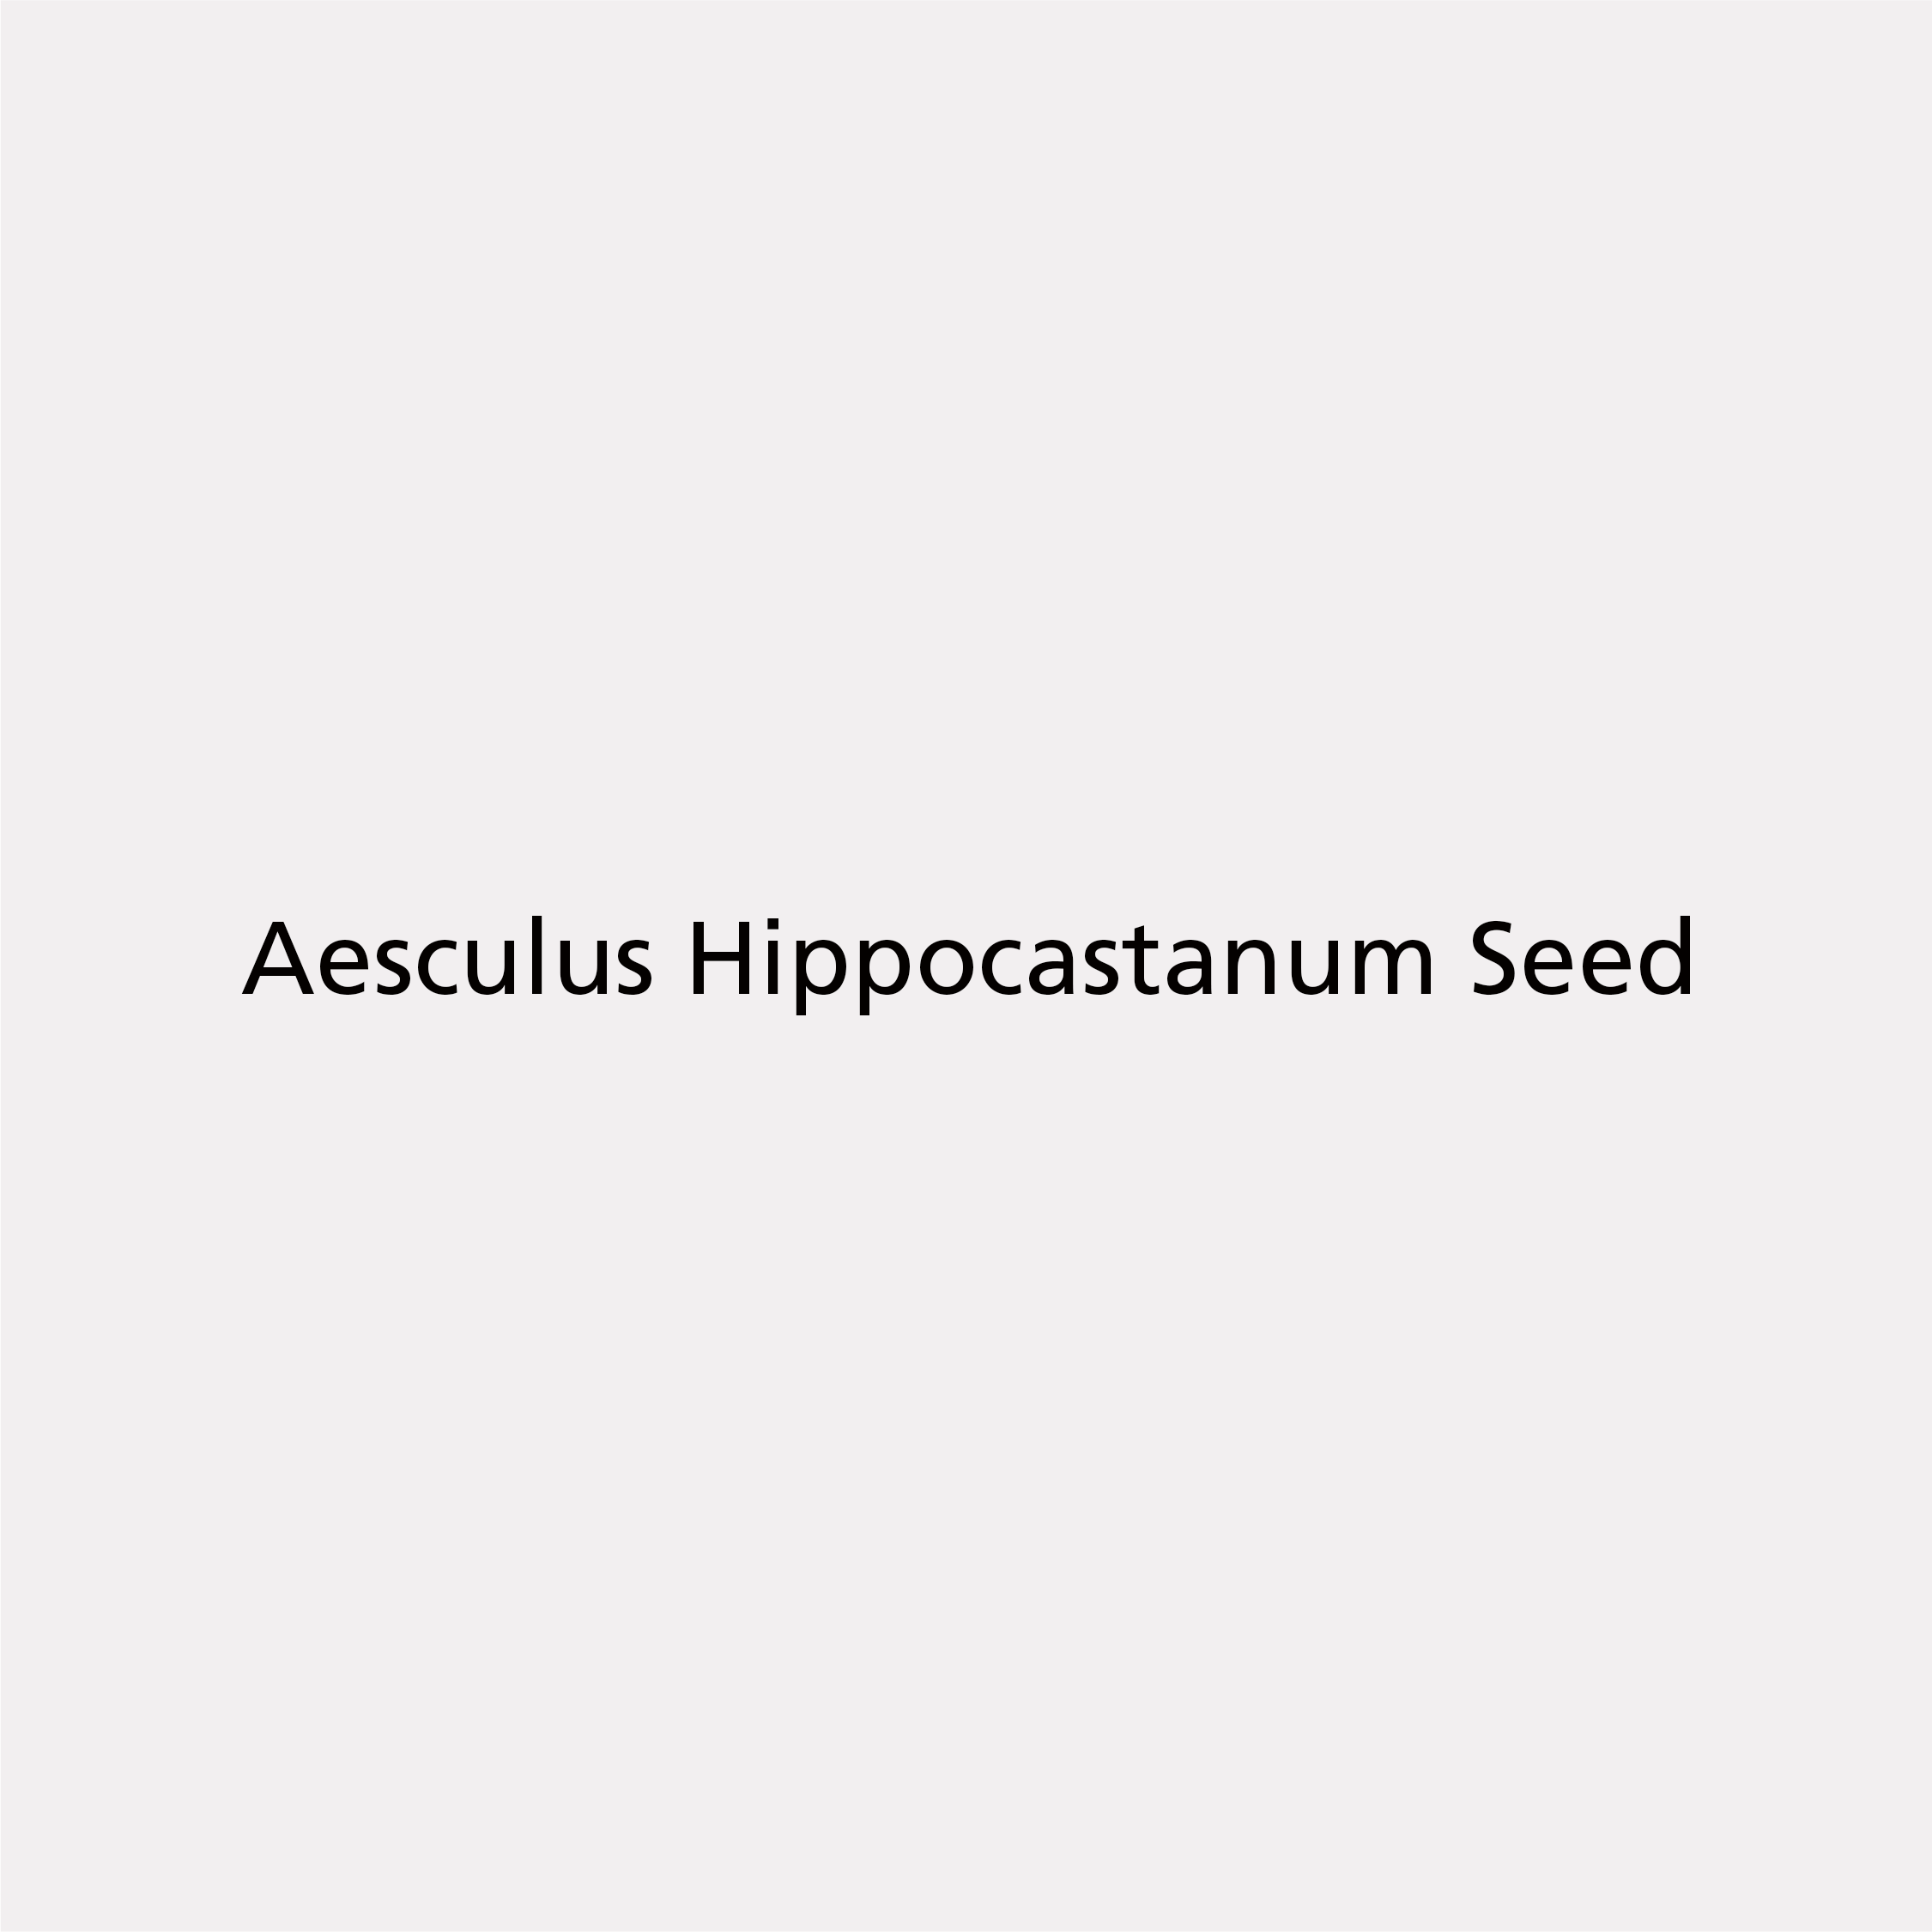 Aesculus Hippocastanum Seed